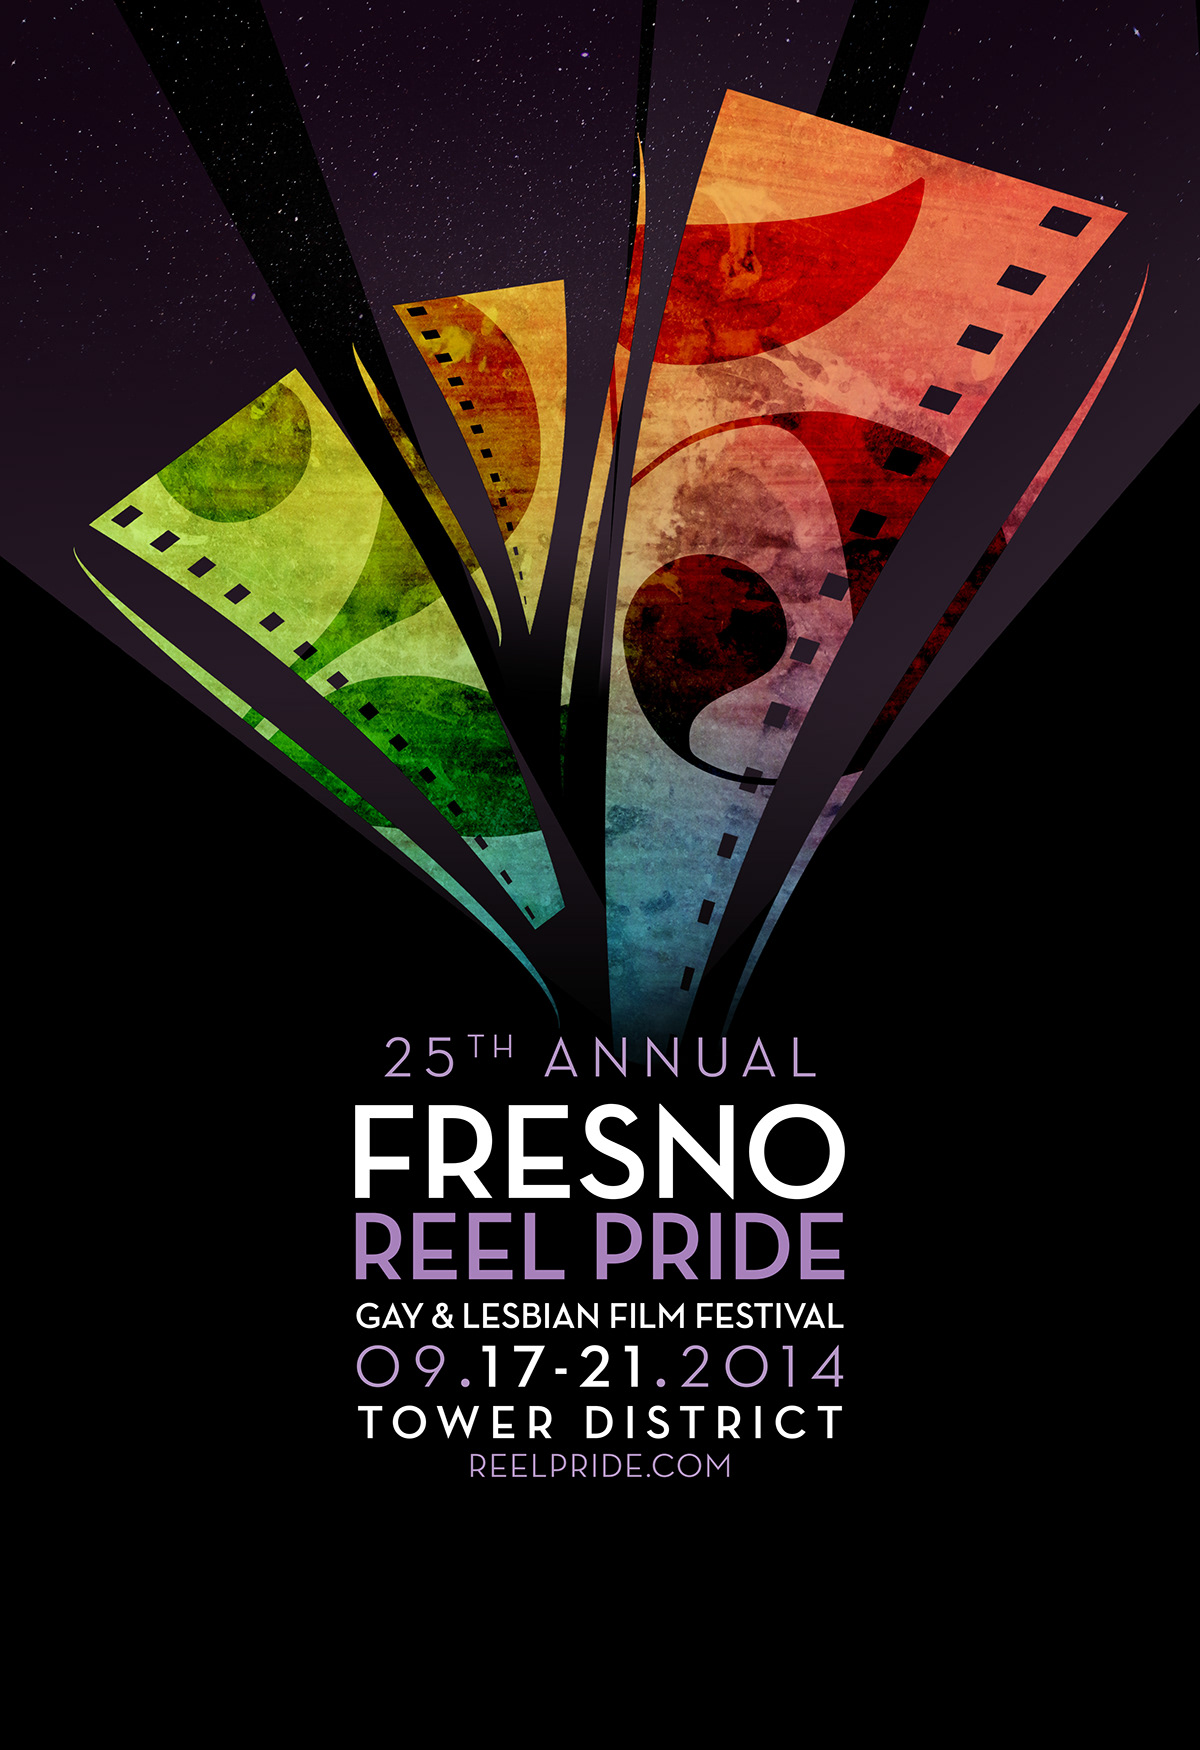 campaign poster logo identity annual image Fresno reel pride LGBT film festival